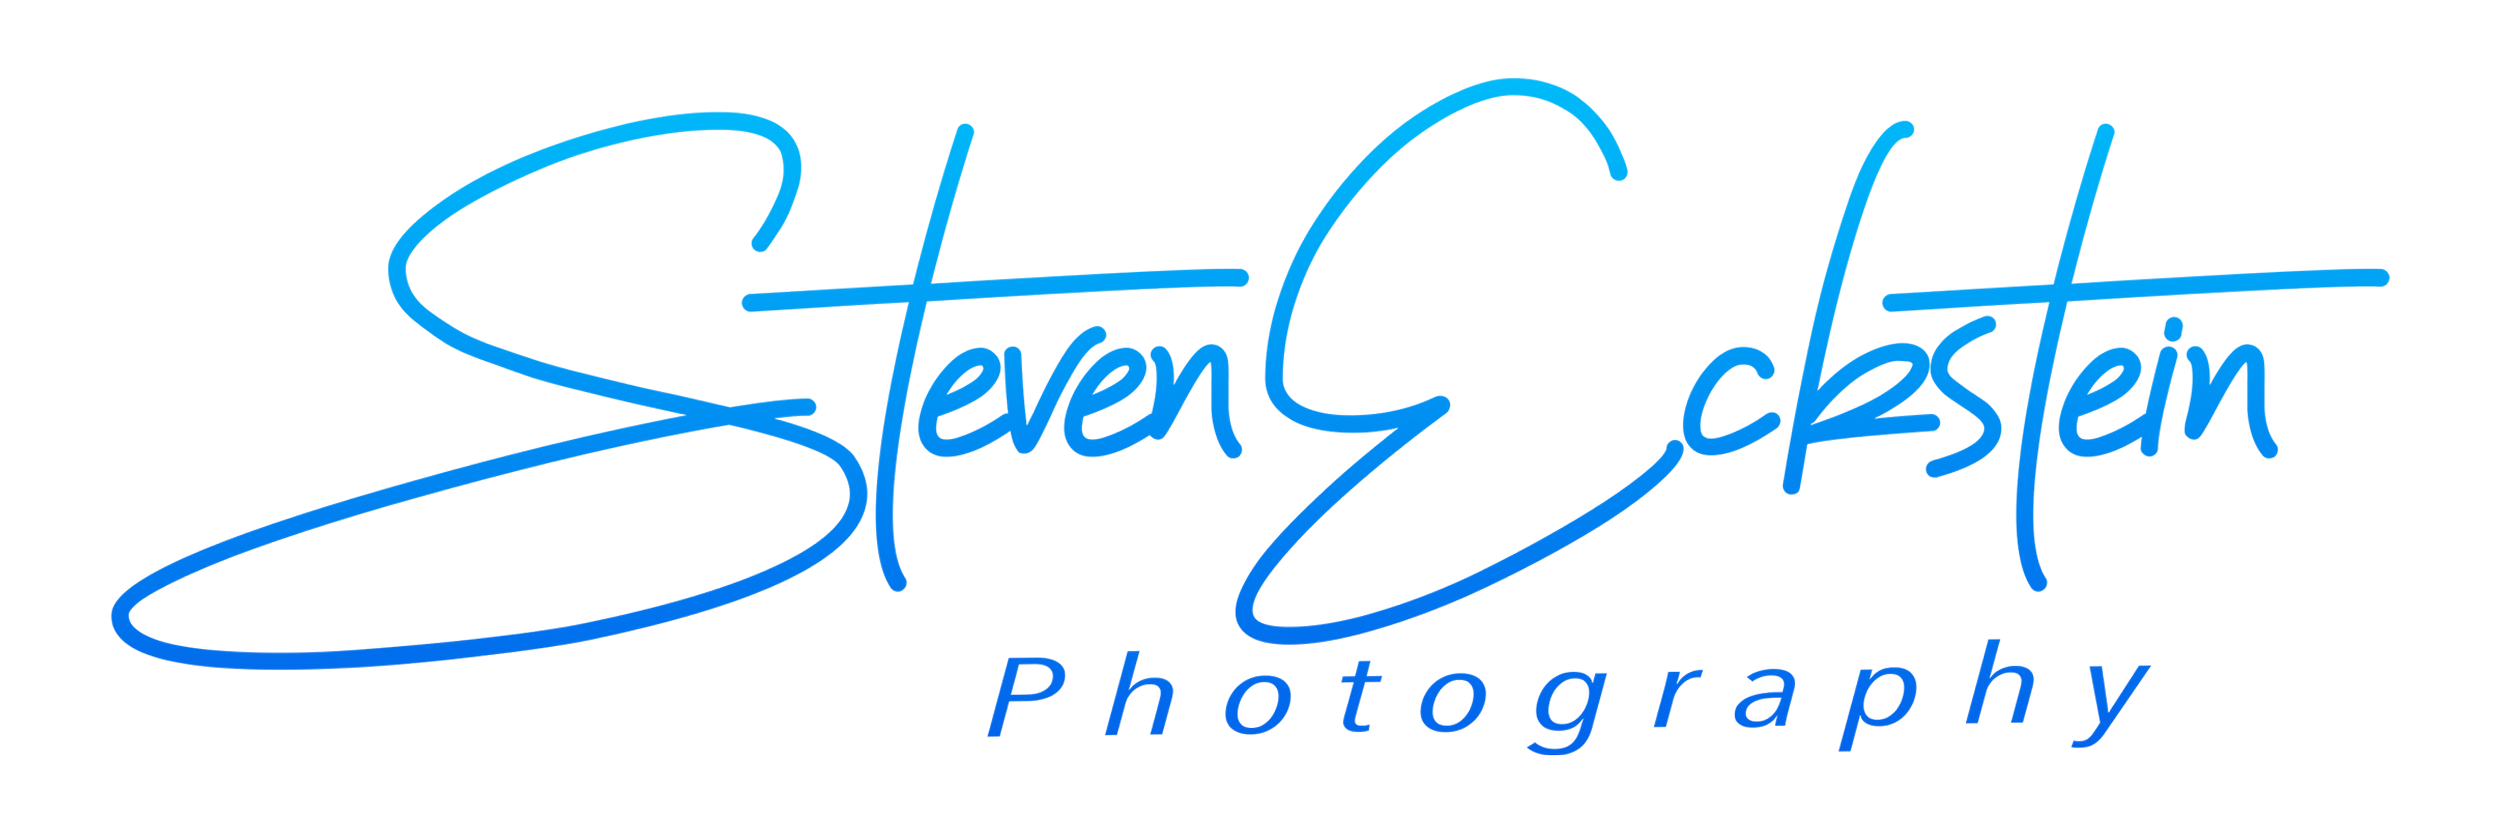 Steve Eckstein Photography